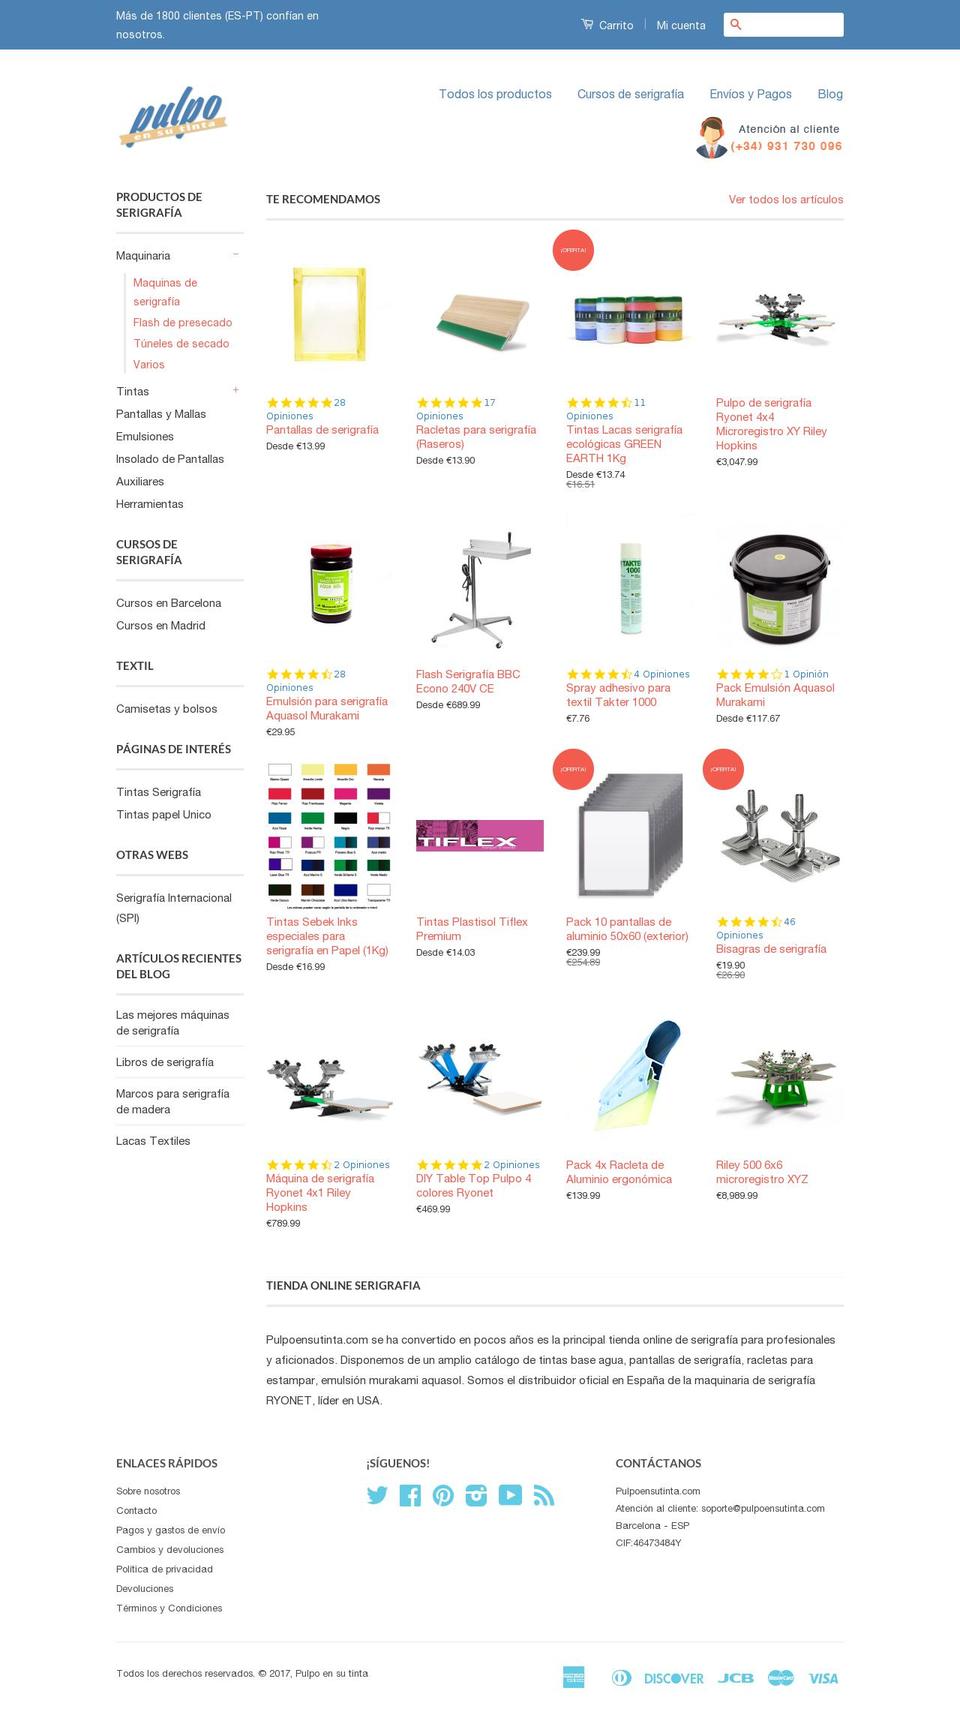 Yanka Shopify theme site example pulpoensutinta.com